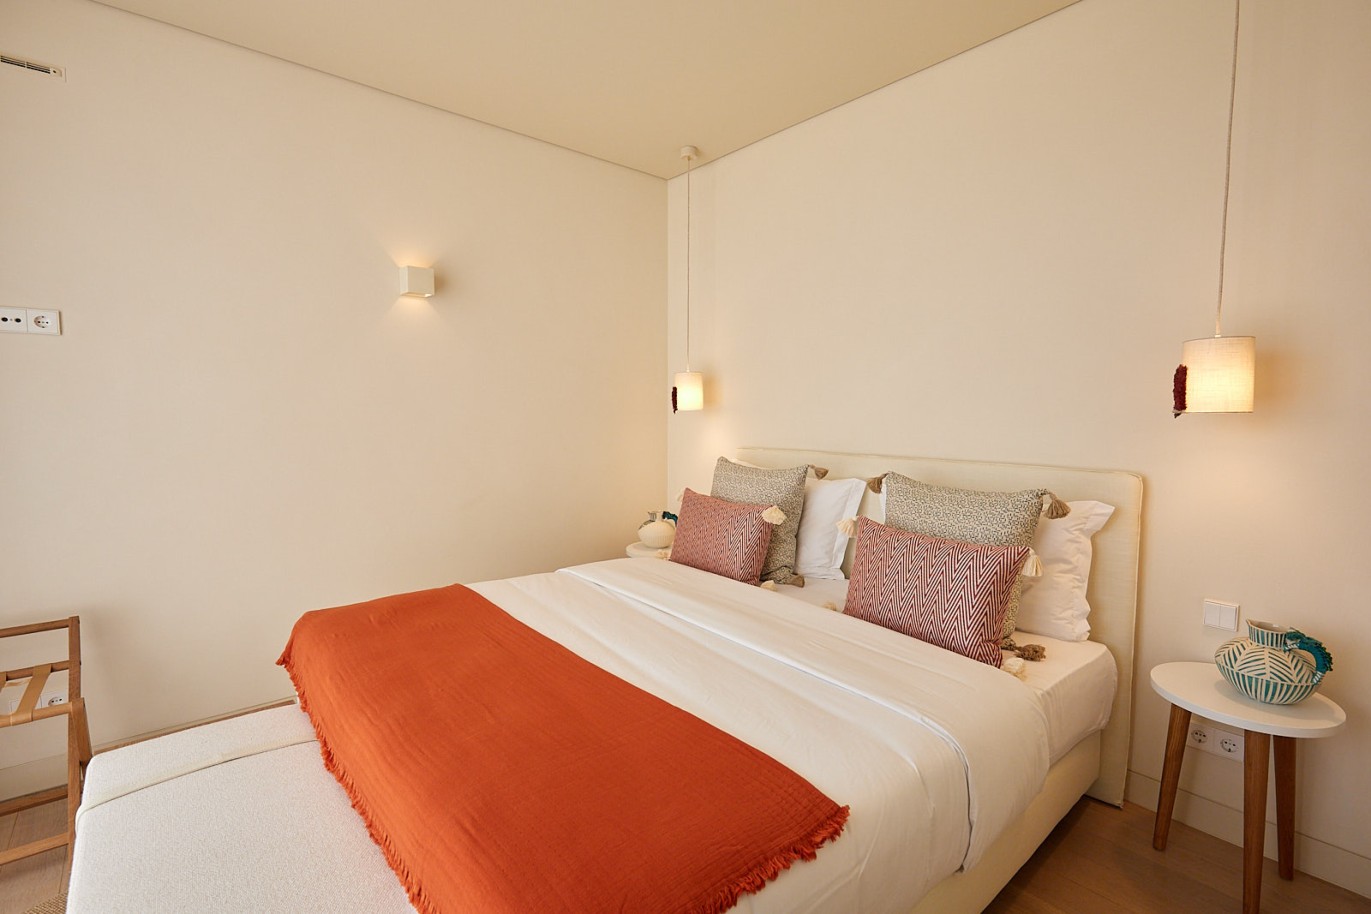 3 bedroom apartment in resort, for sale in Porches, Algarve_230716